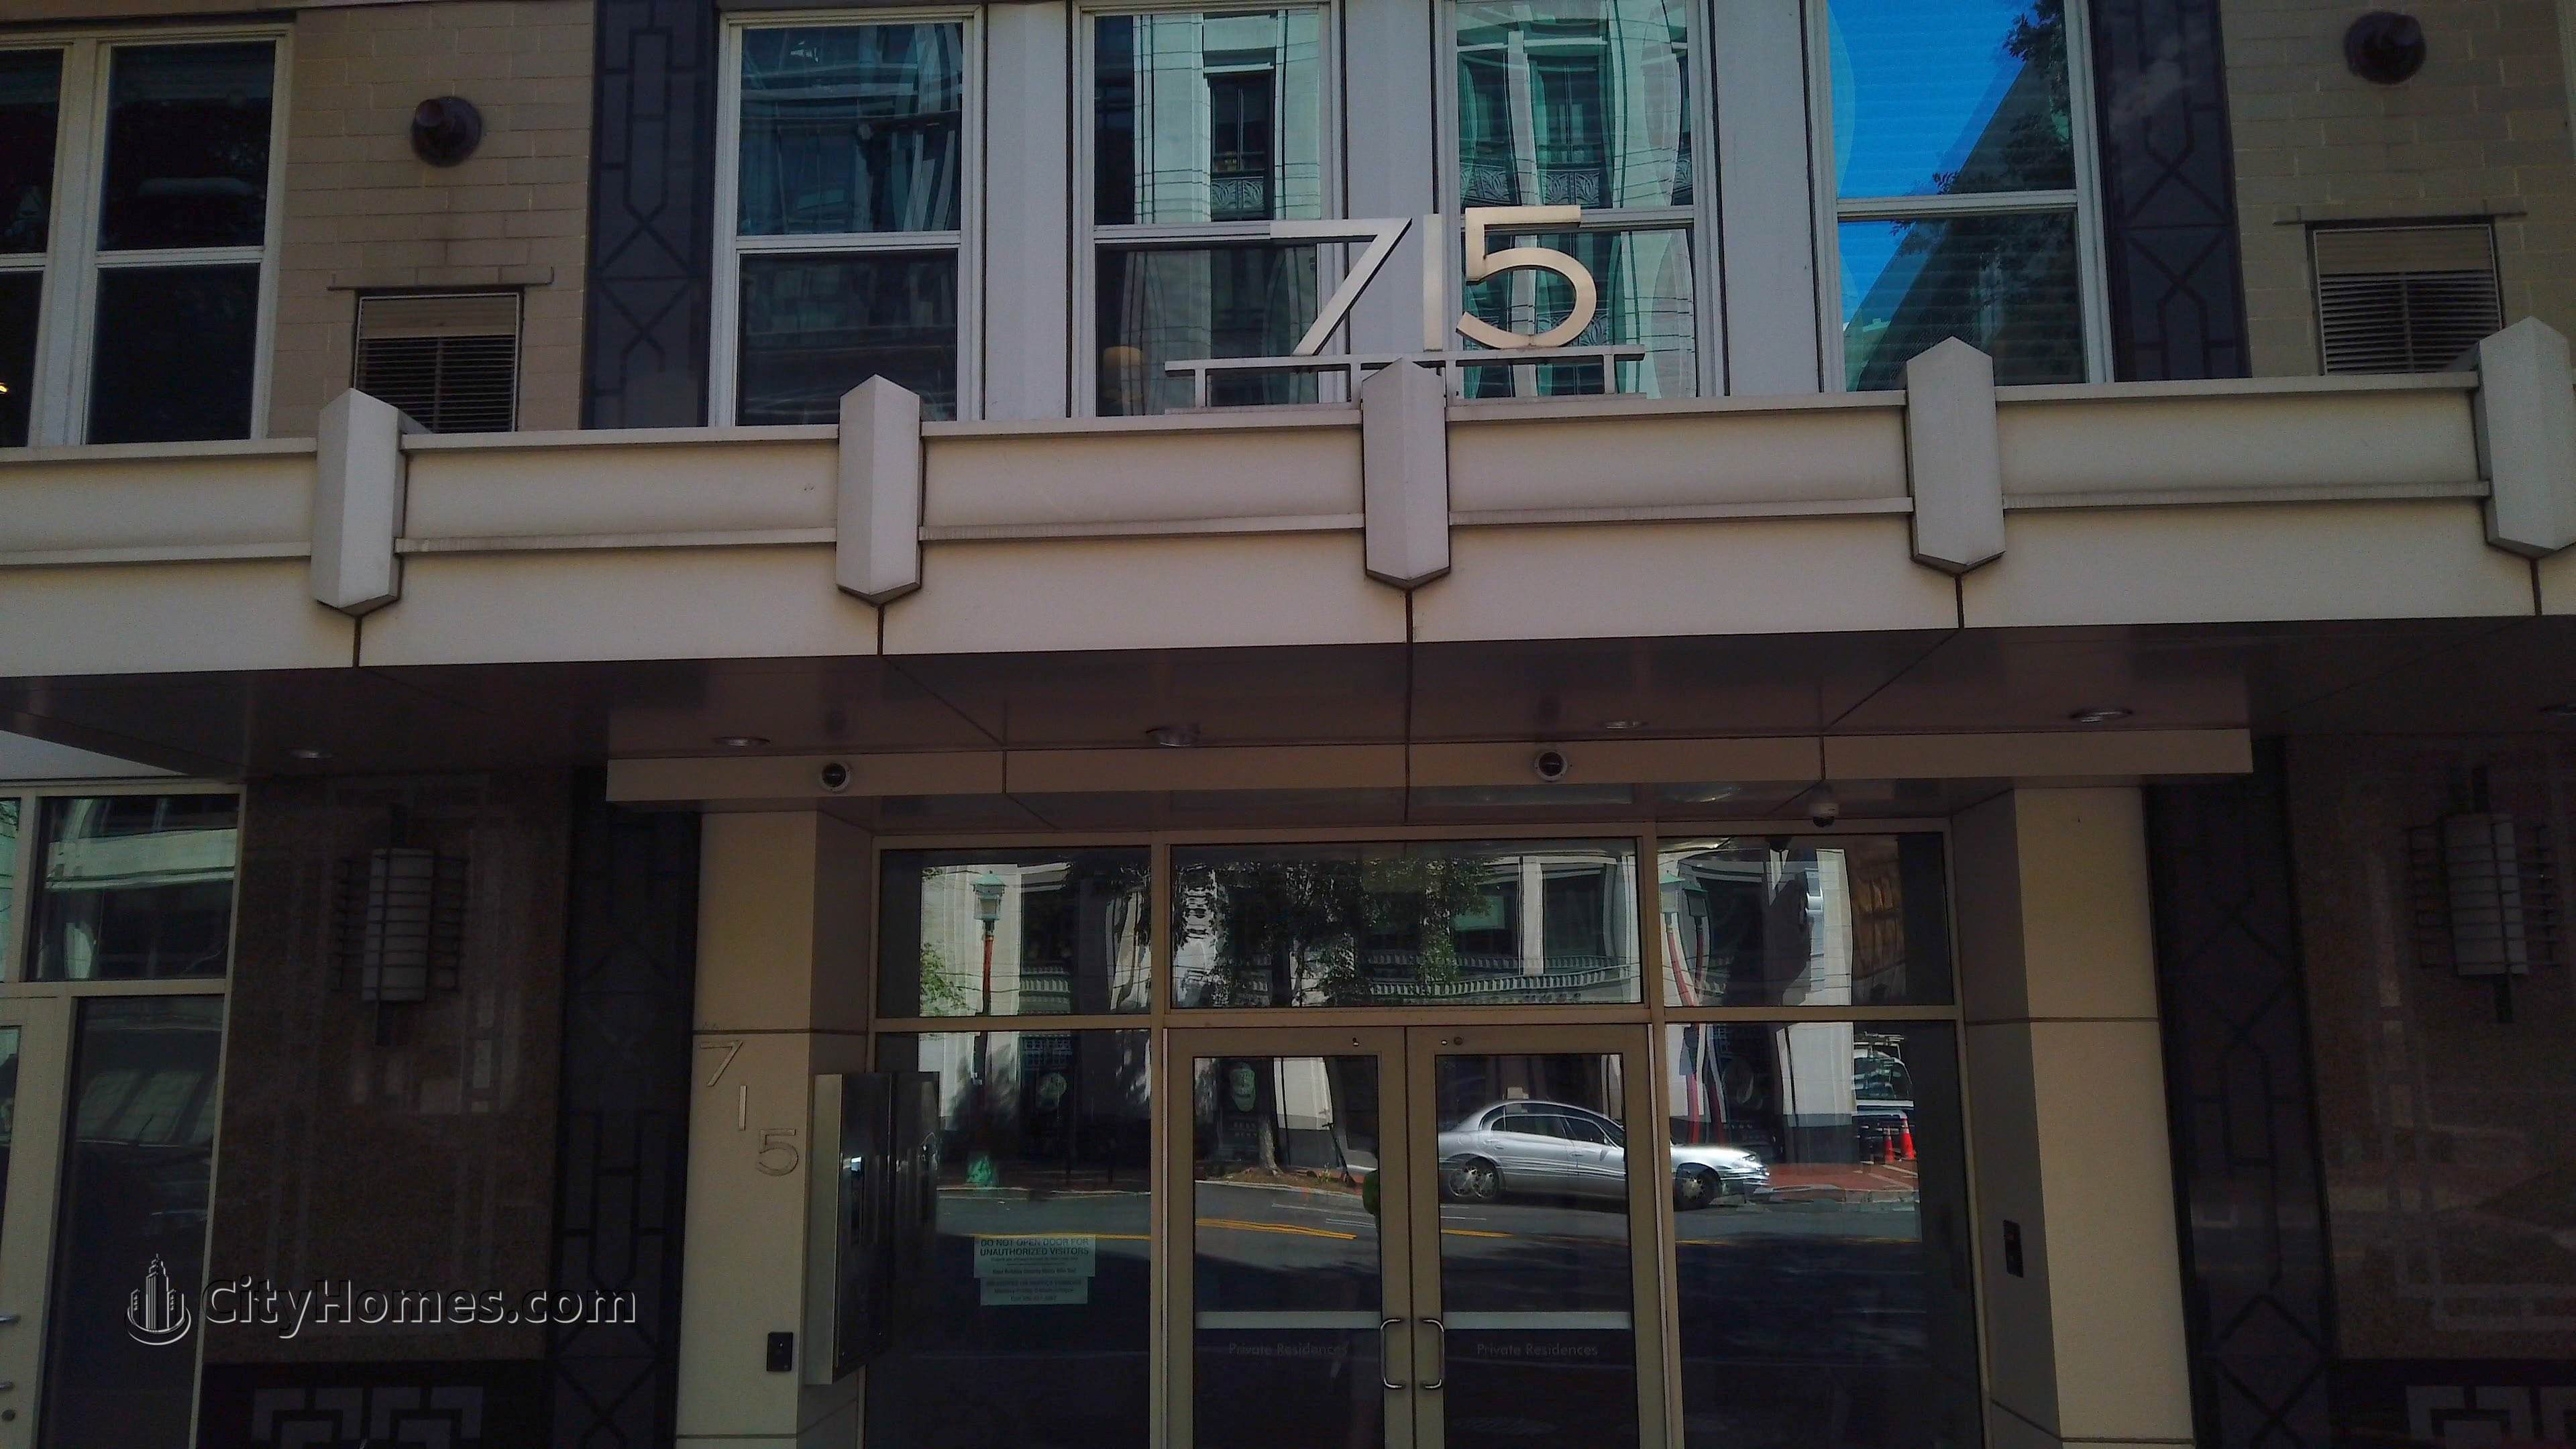 The Cosmopolitan Gebäude bei 715 6th St NW, Chinatown, Washington, DC 20001